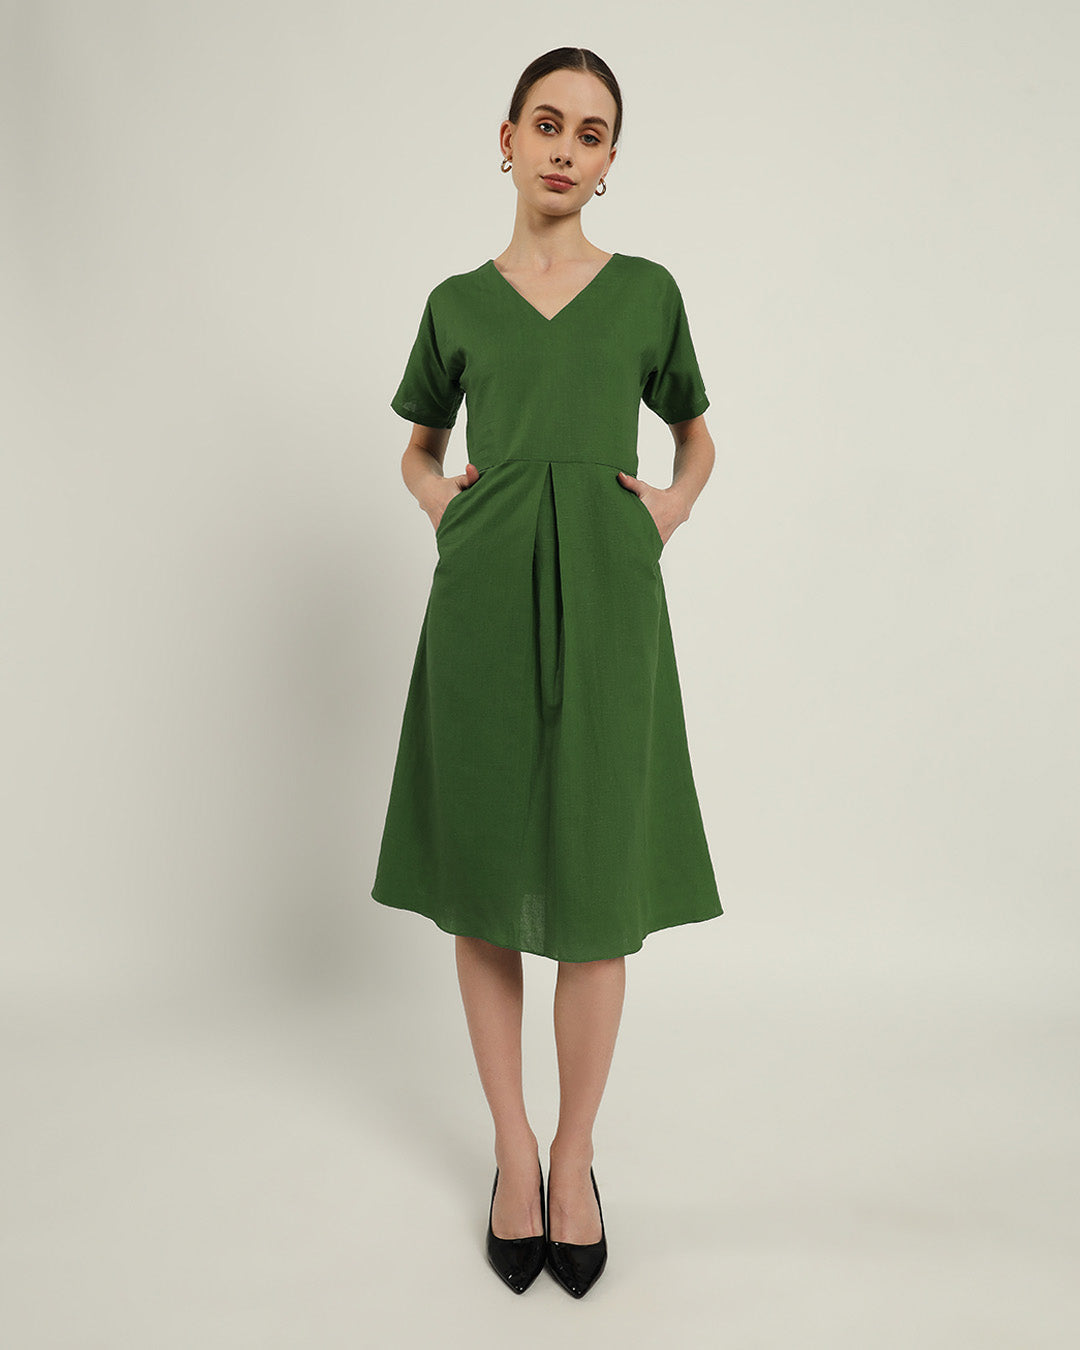 The Memphis Emerald Cotton Dress